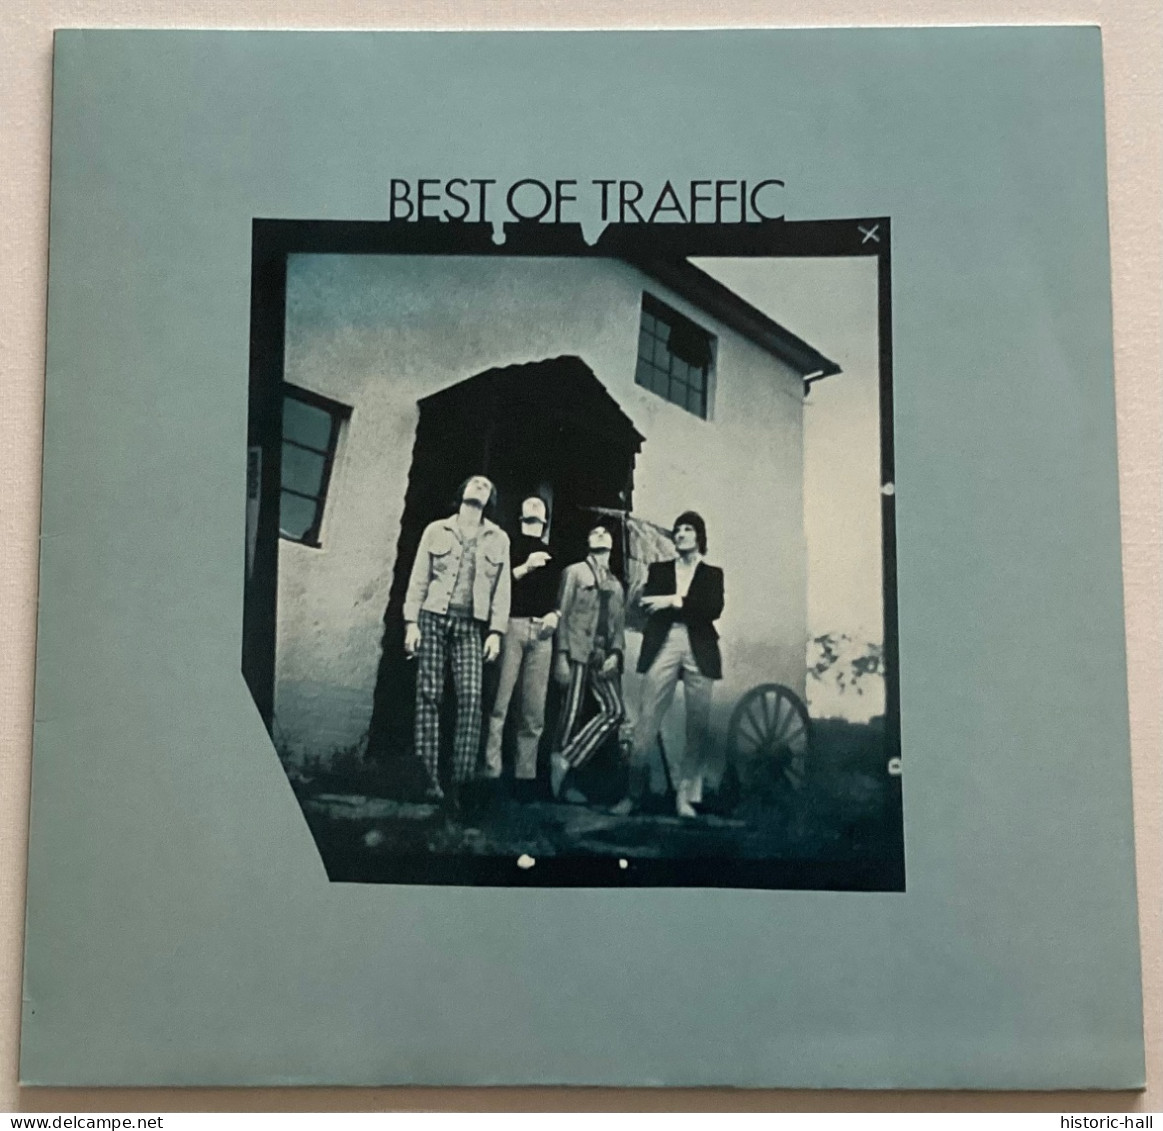 Best Of TRAFFIC - LP - 1969/81 - German Press - Rock